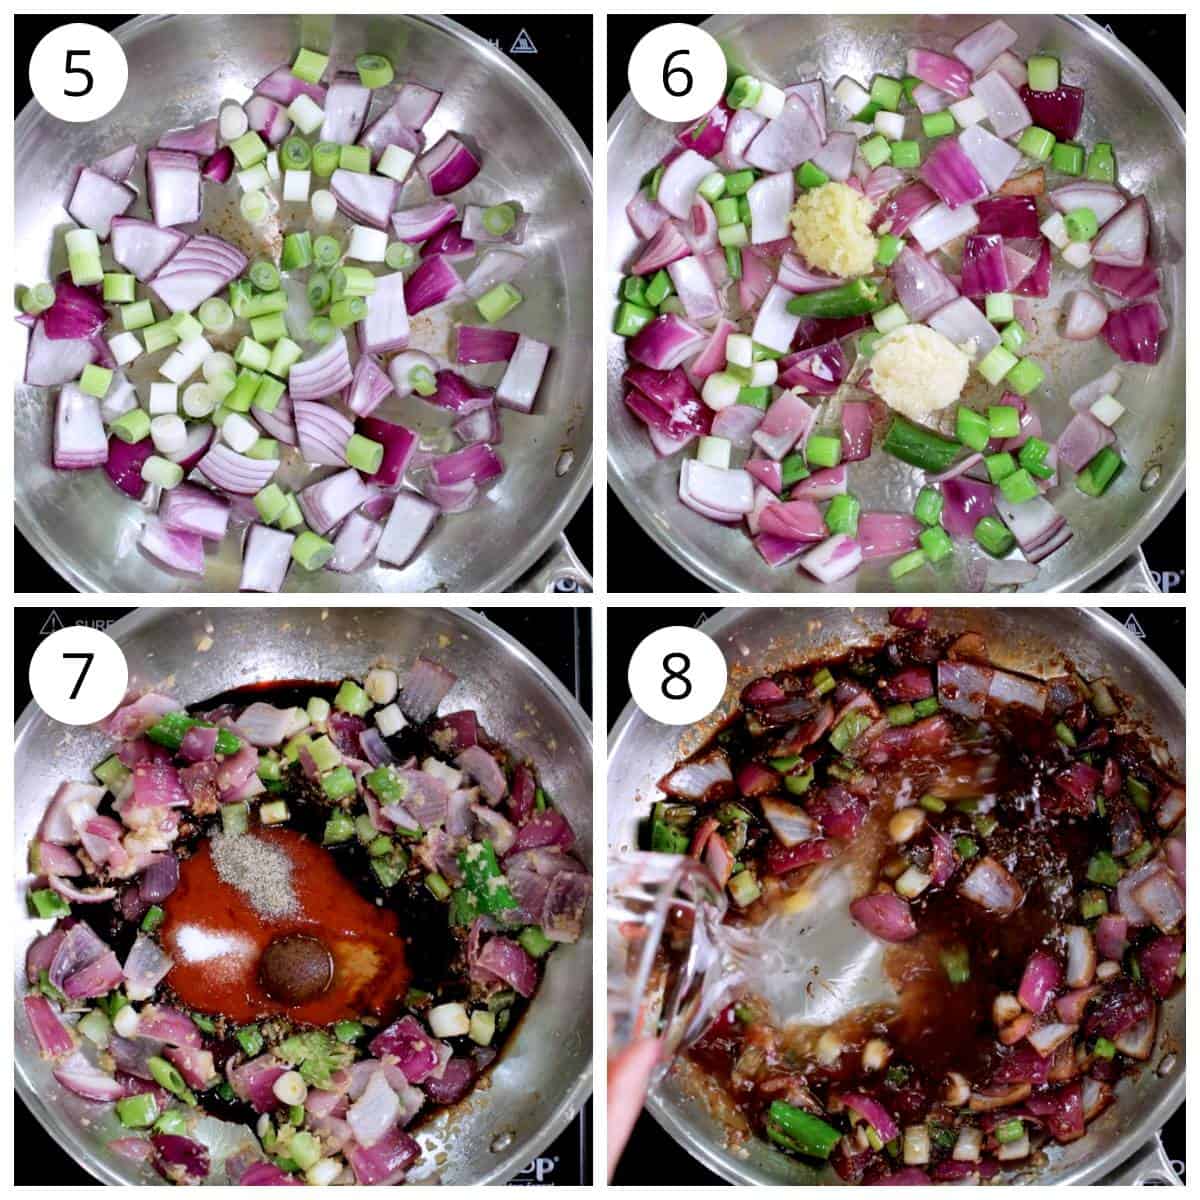 steps to make hot garlic sauce